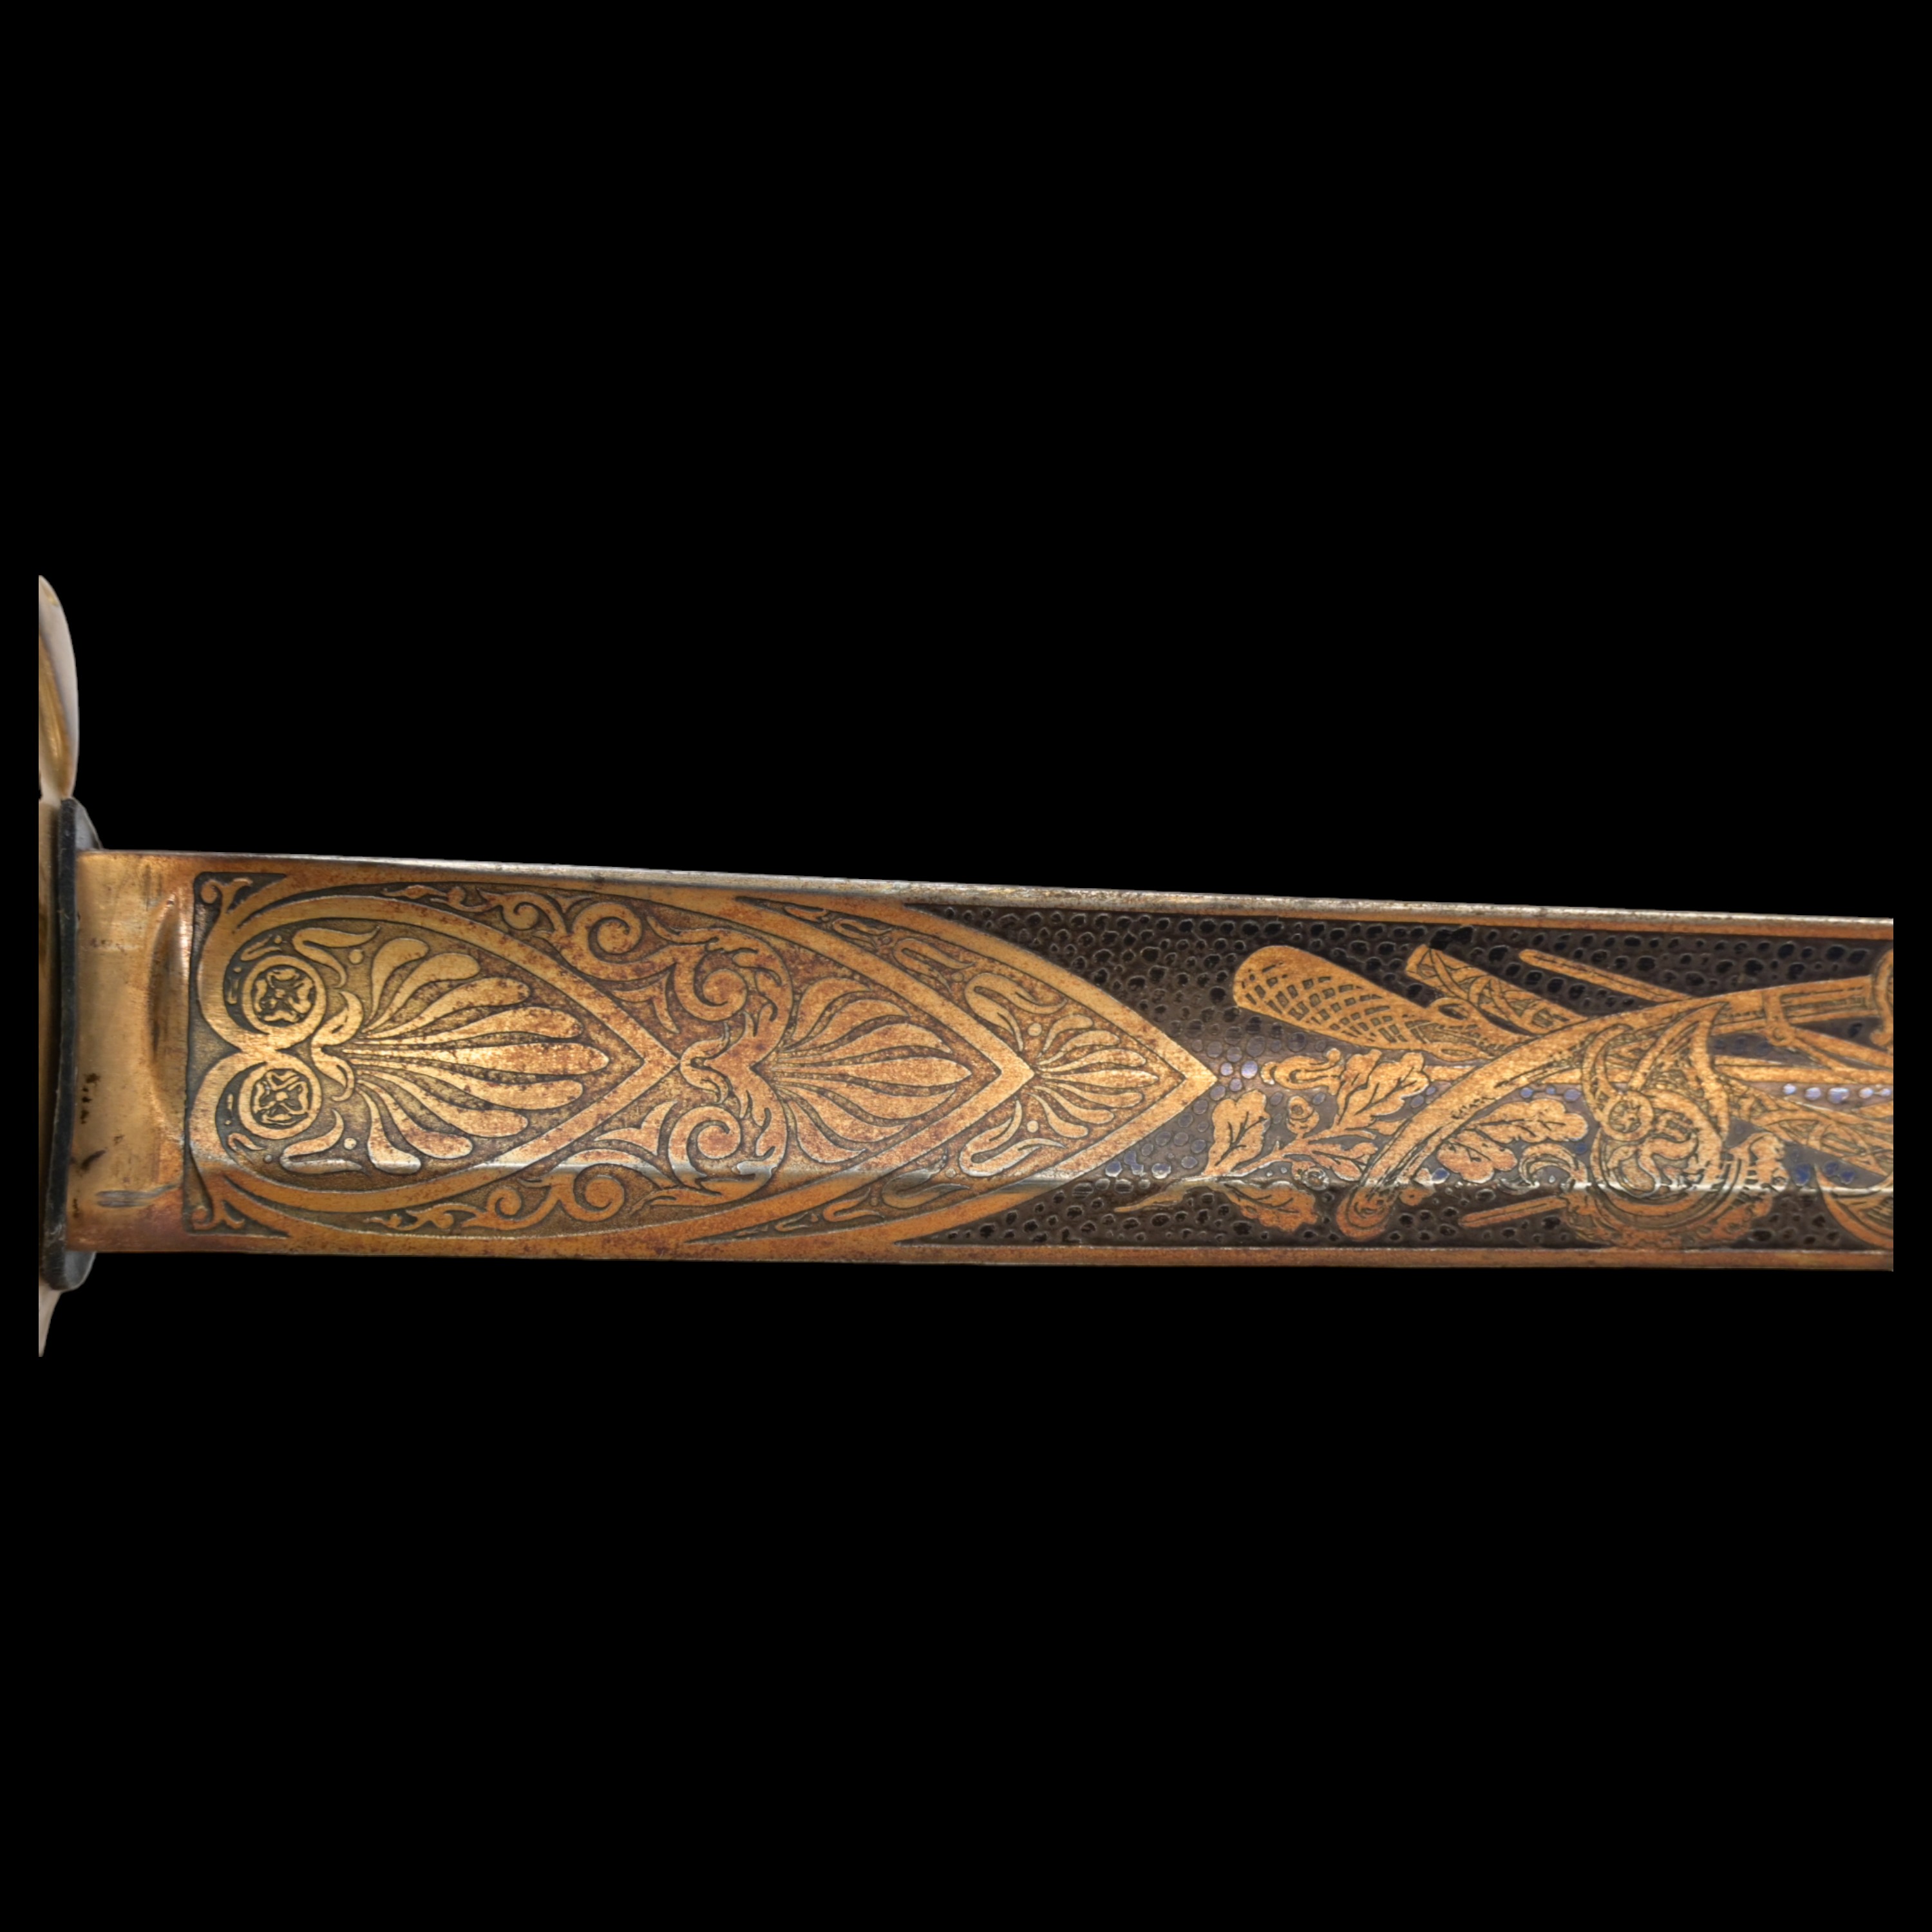 Russian sword, "For bravery" signature on the blade "I Boyarshinov, Zatoust, 1831". - Image 25 of 25